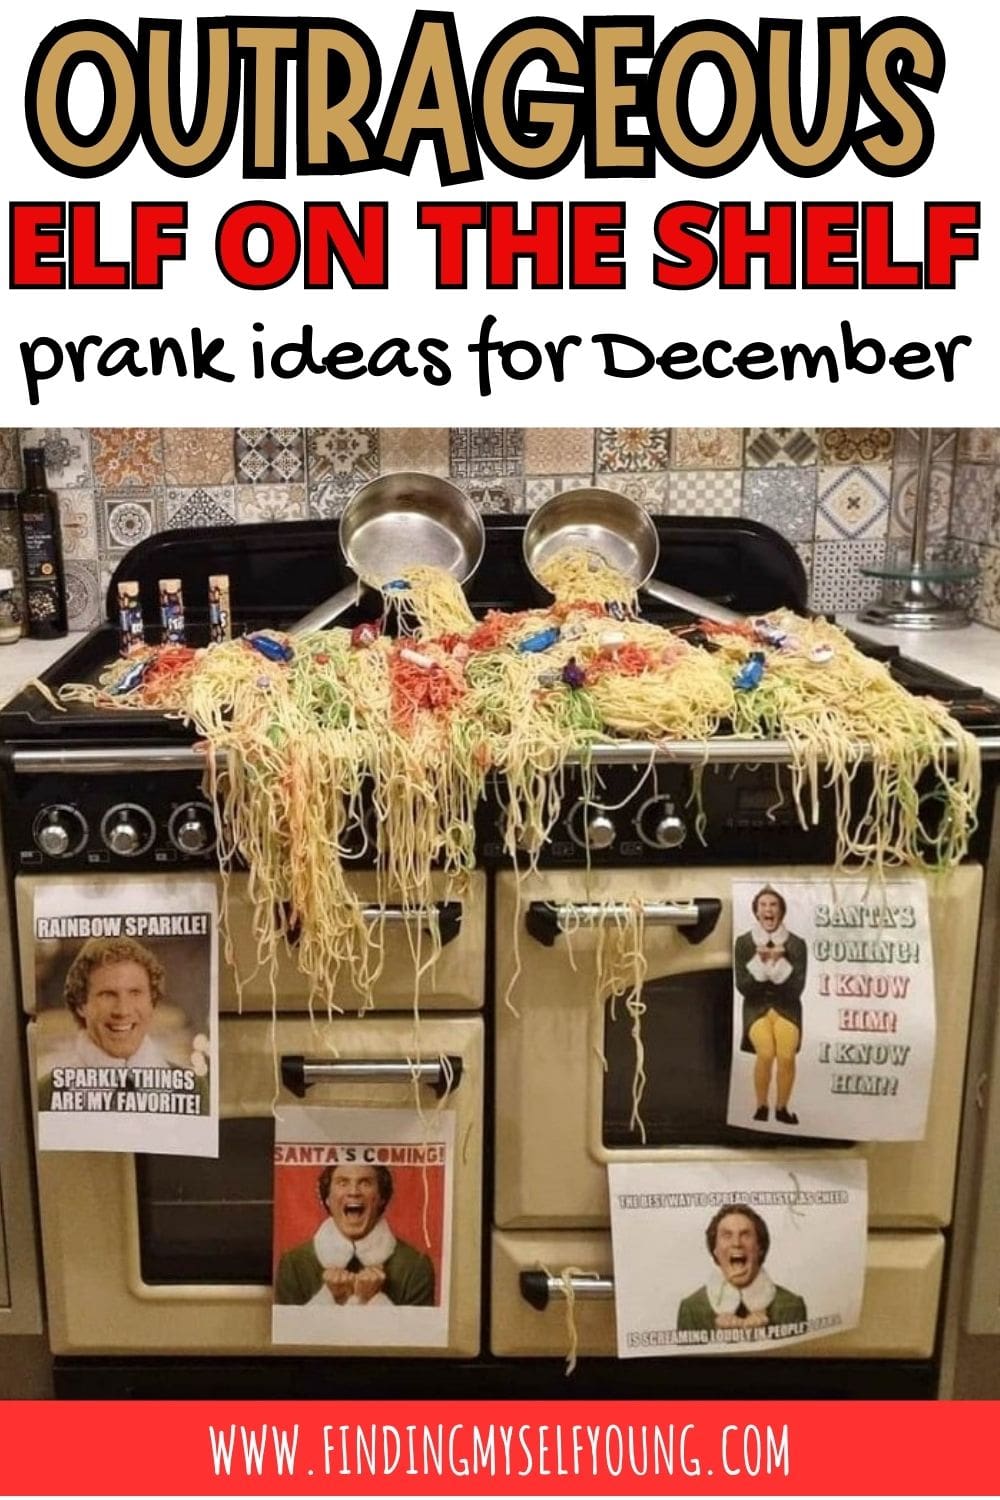 outrageous elf on the shelf pranks for December